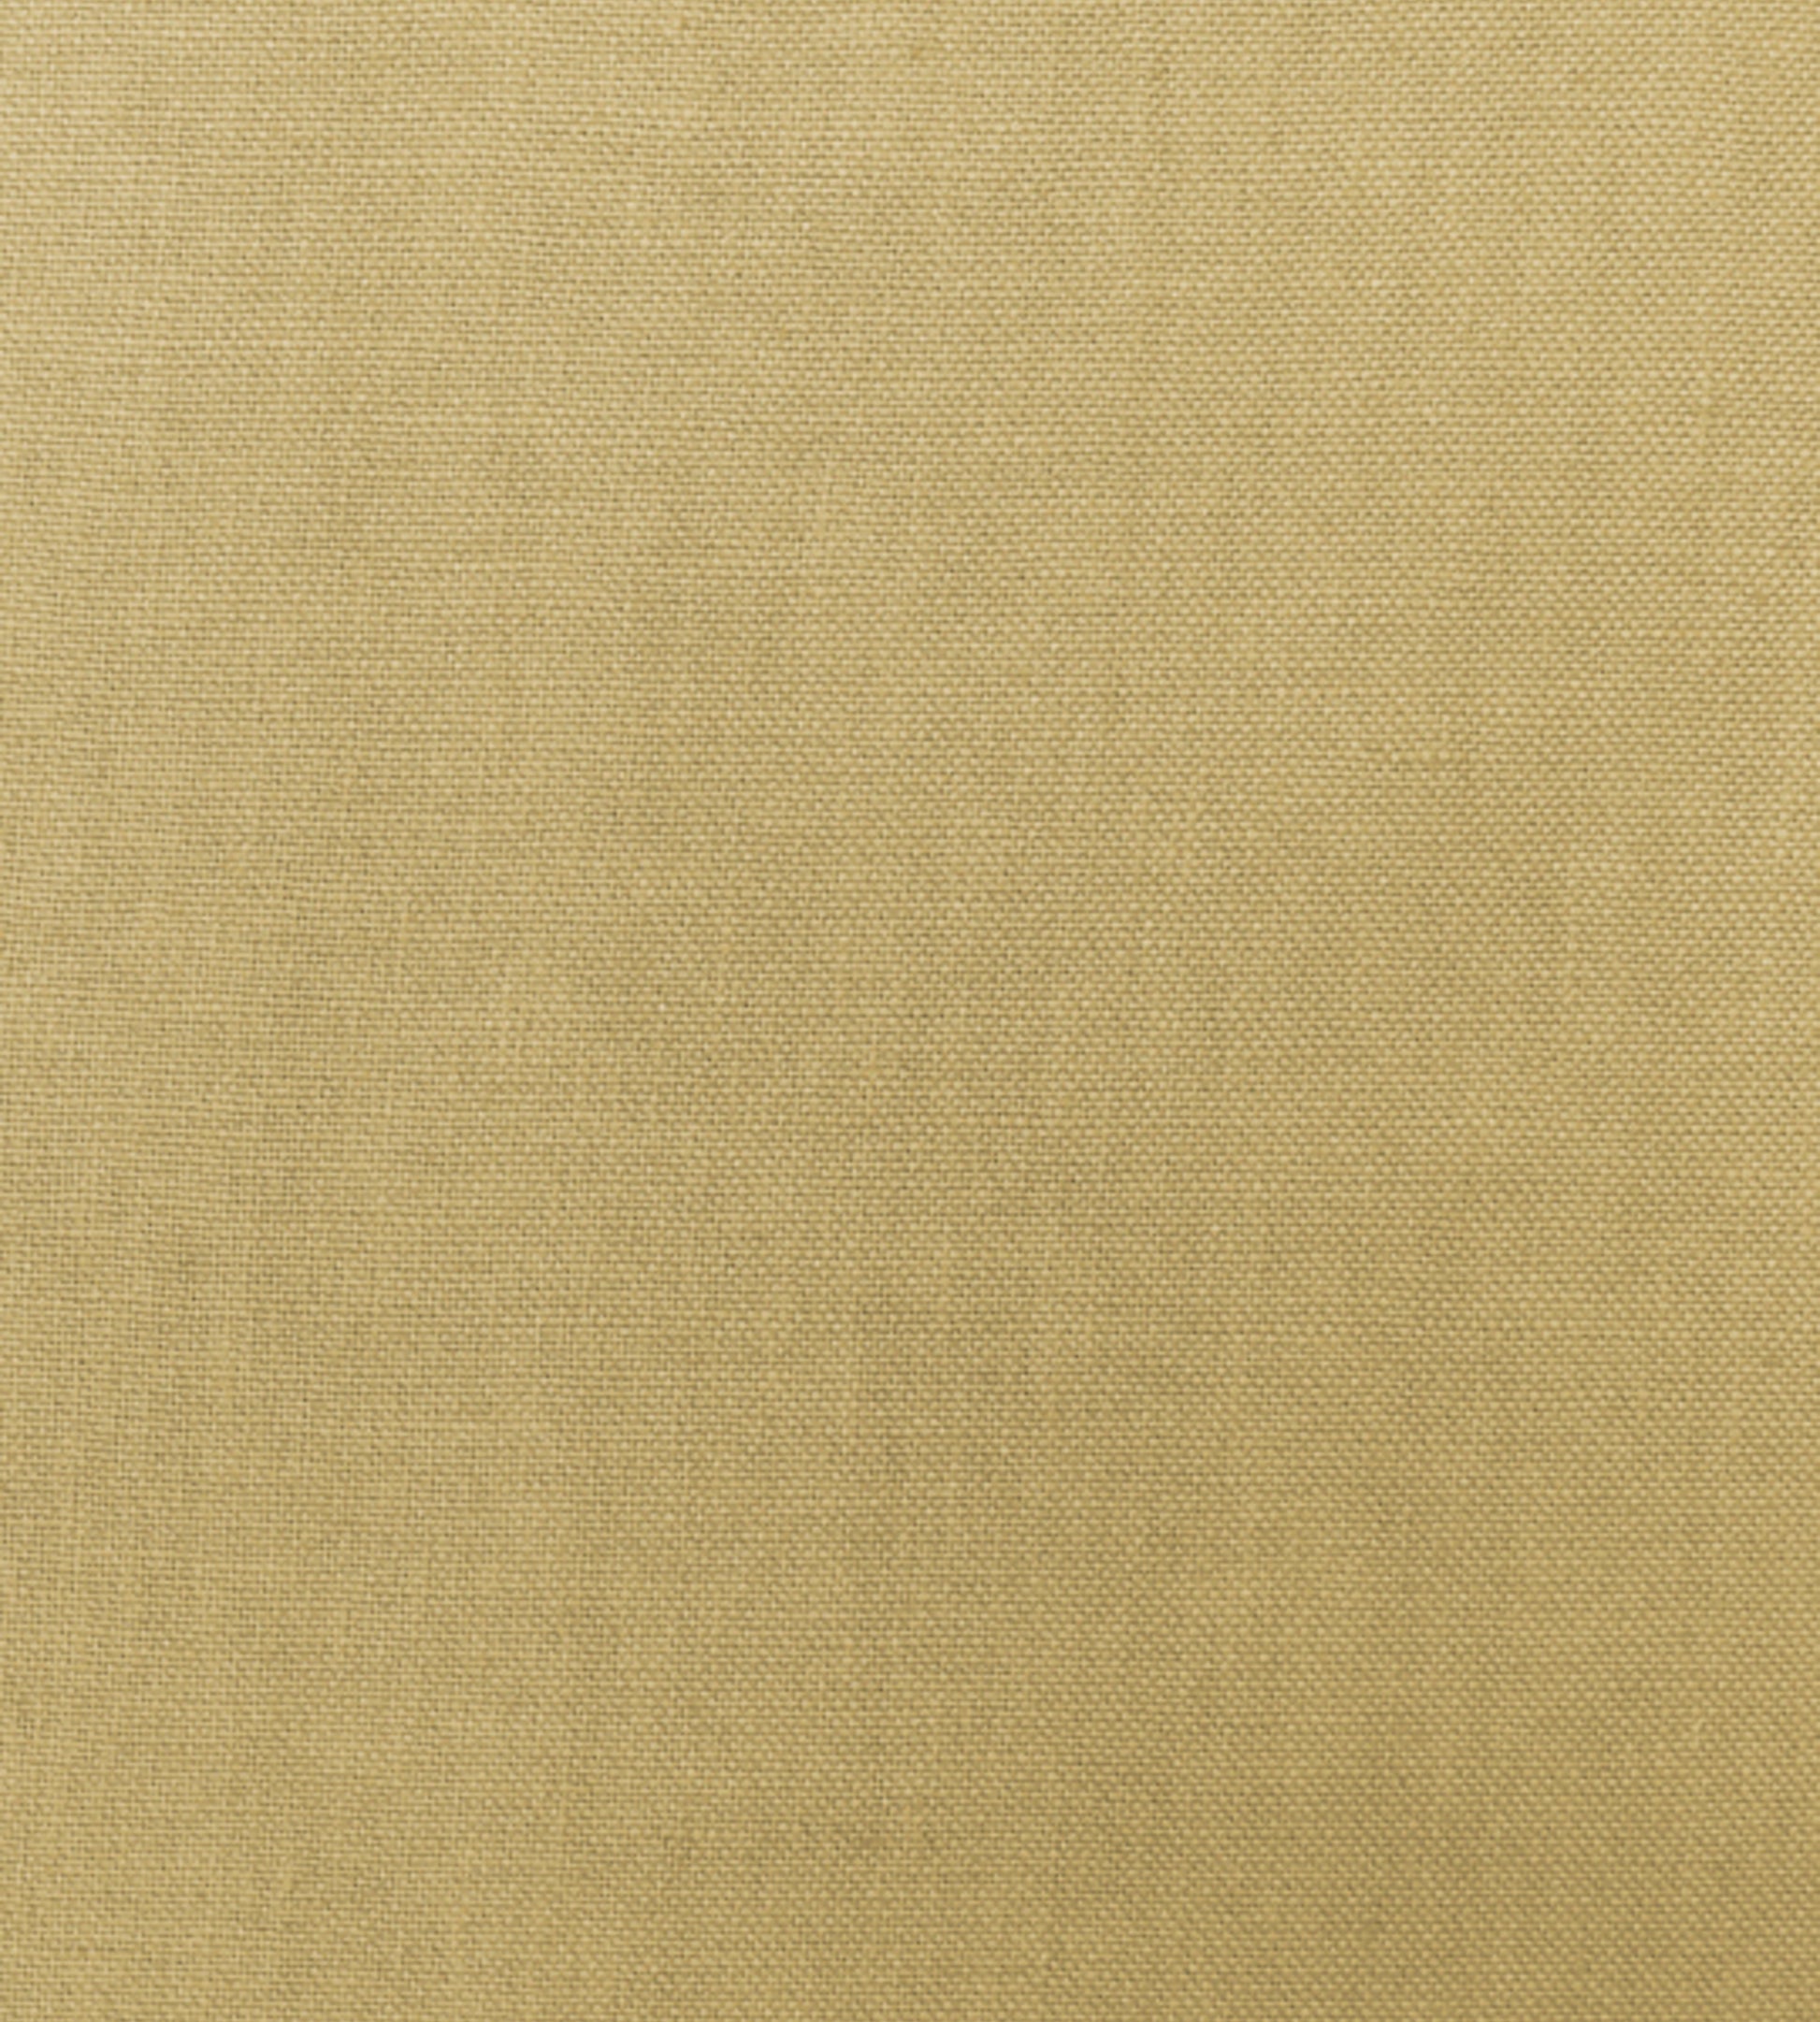 Purchase Scalamandre Fabric Pattern# SC 000727108, Toscana Linen Sahara 1